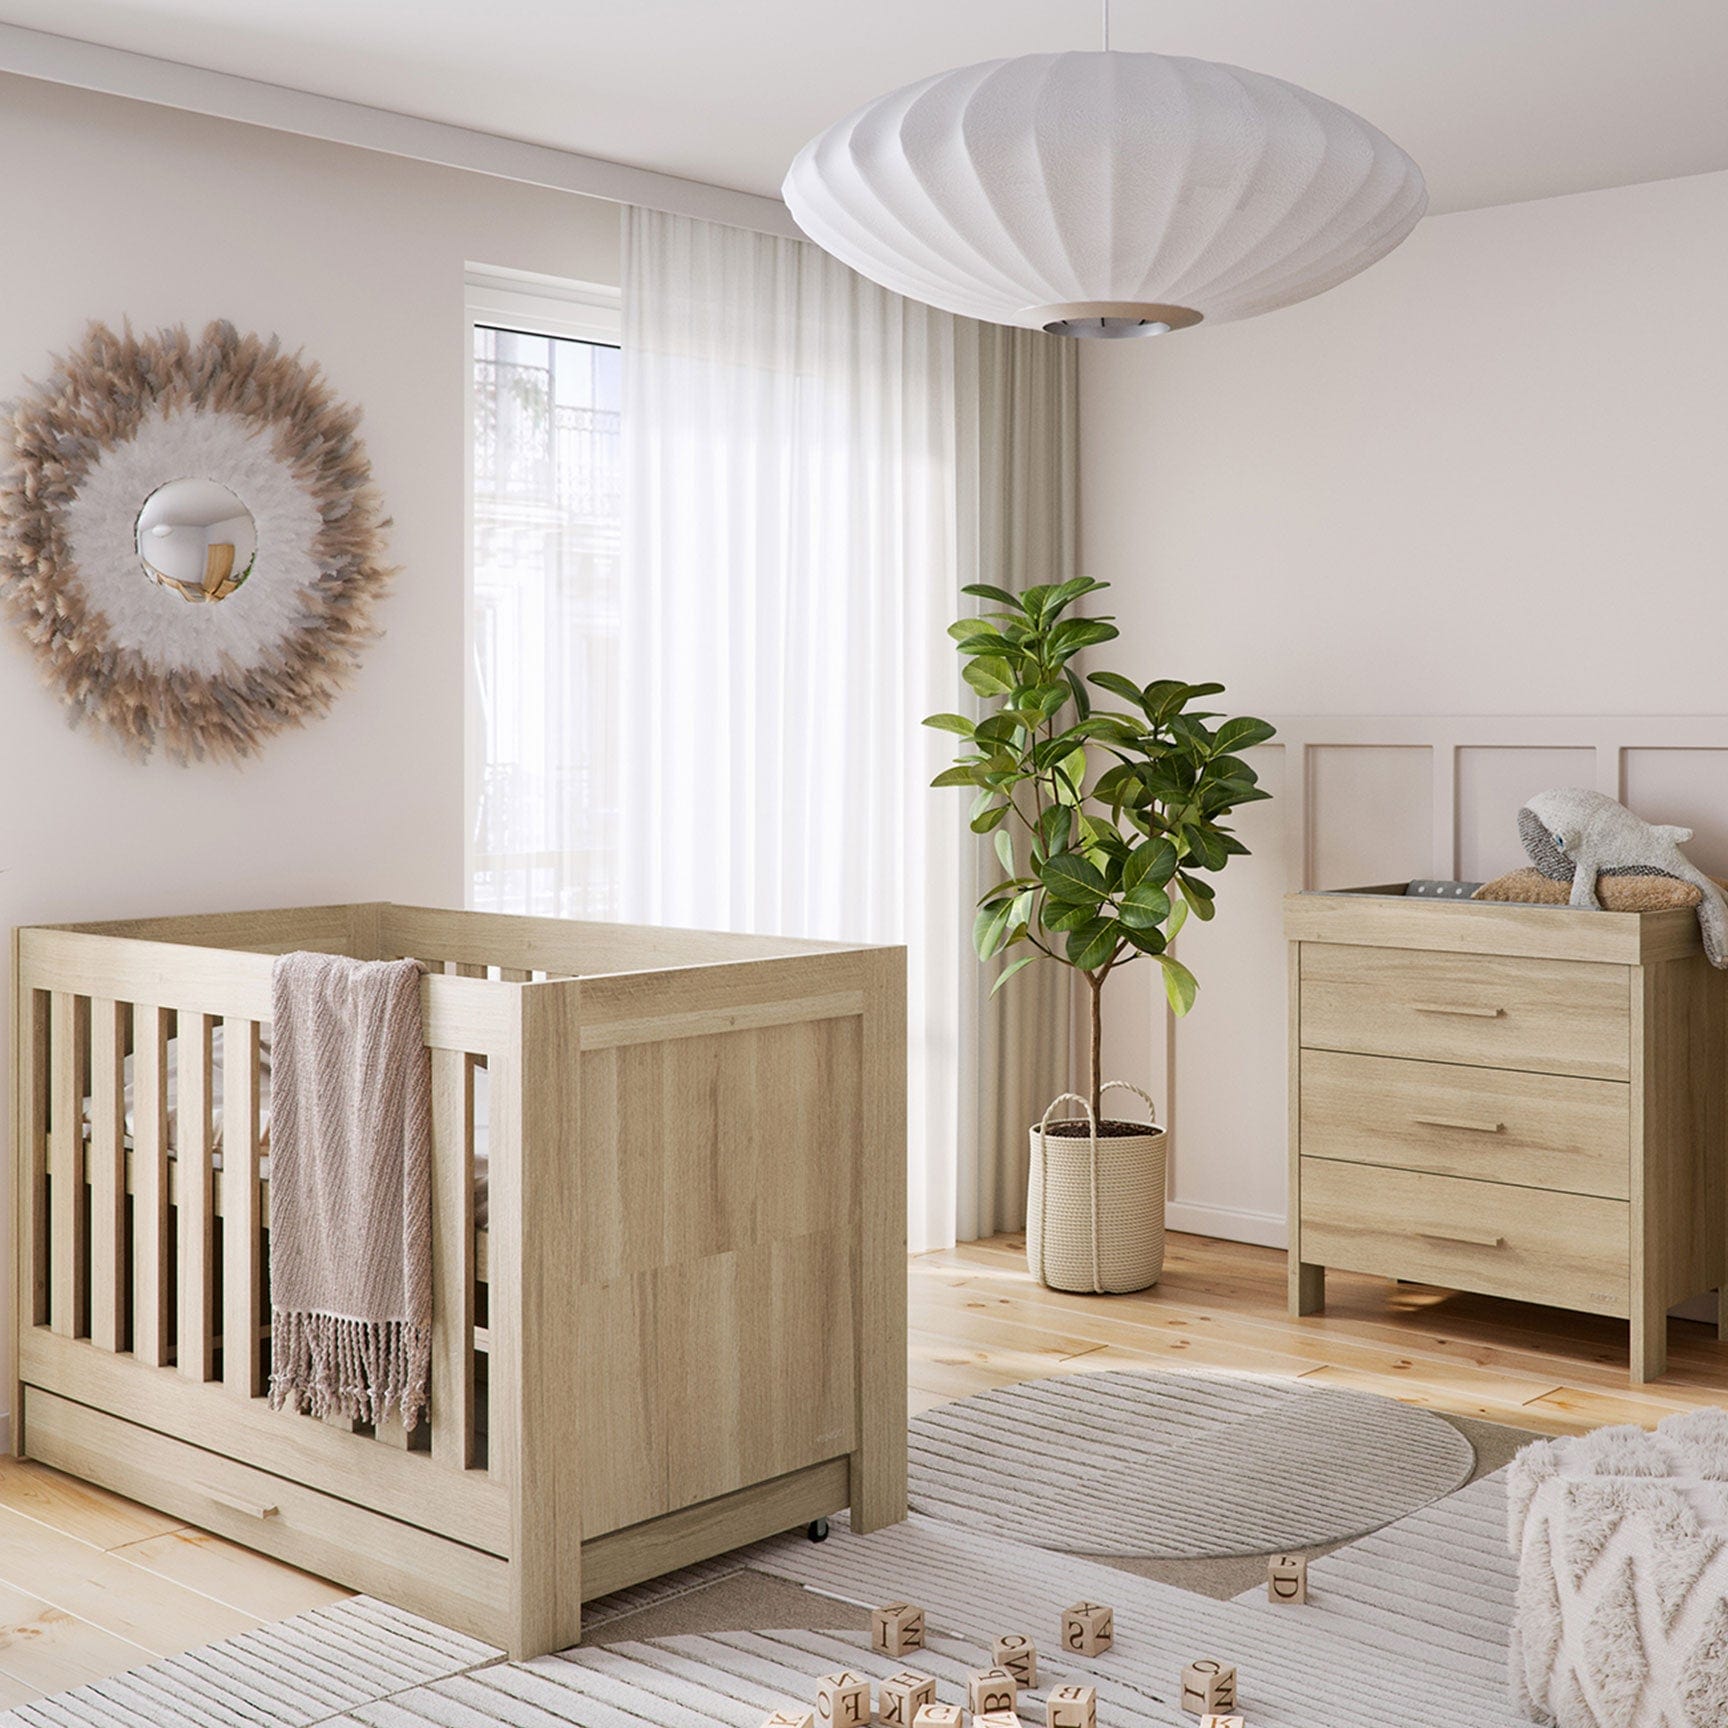 Venicci Nursery Room Sets Venicci Forenzo 2 Piece Dresser Roomset in Honey Oak